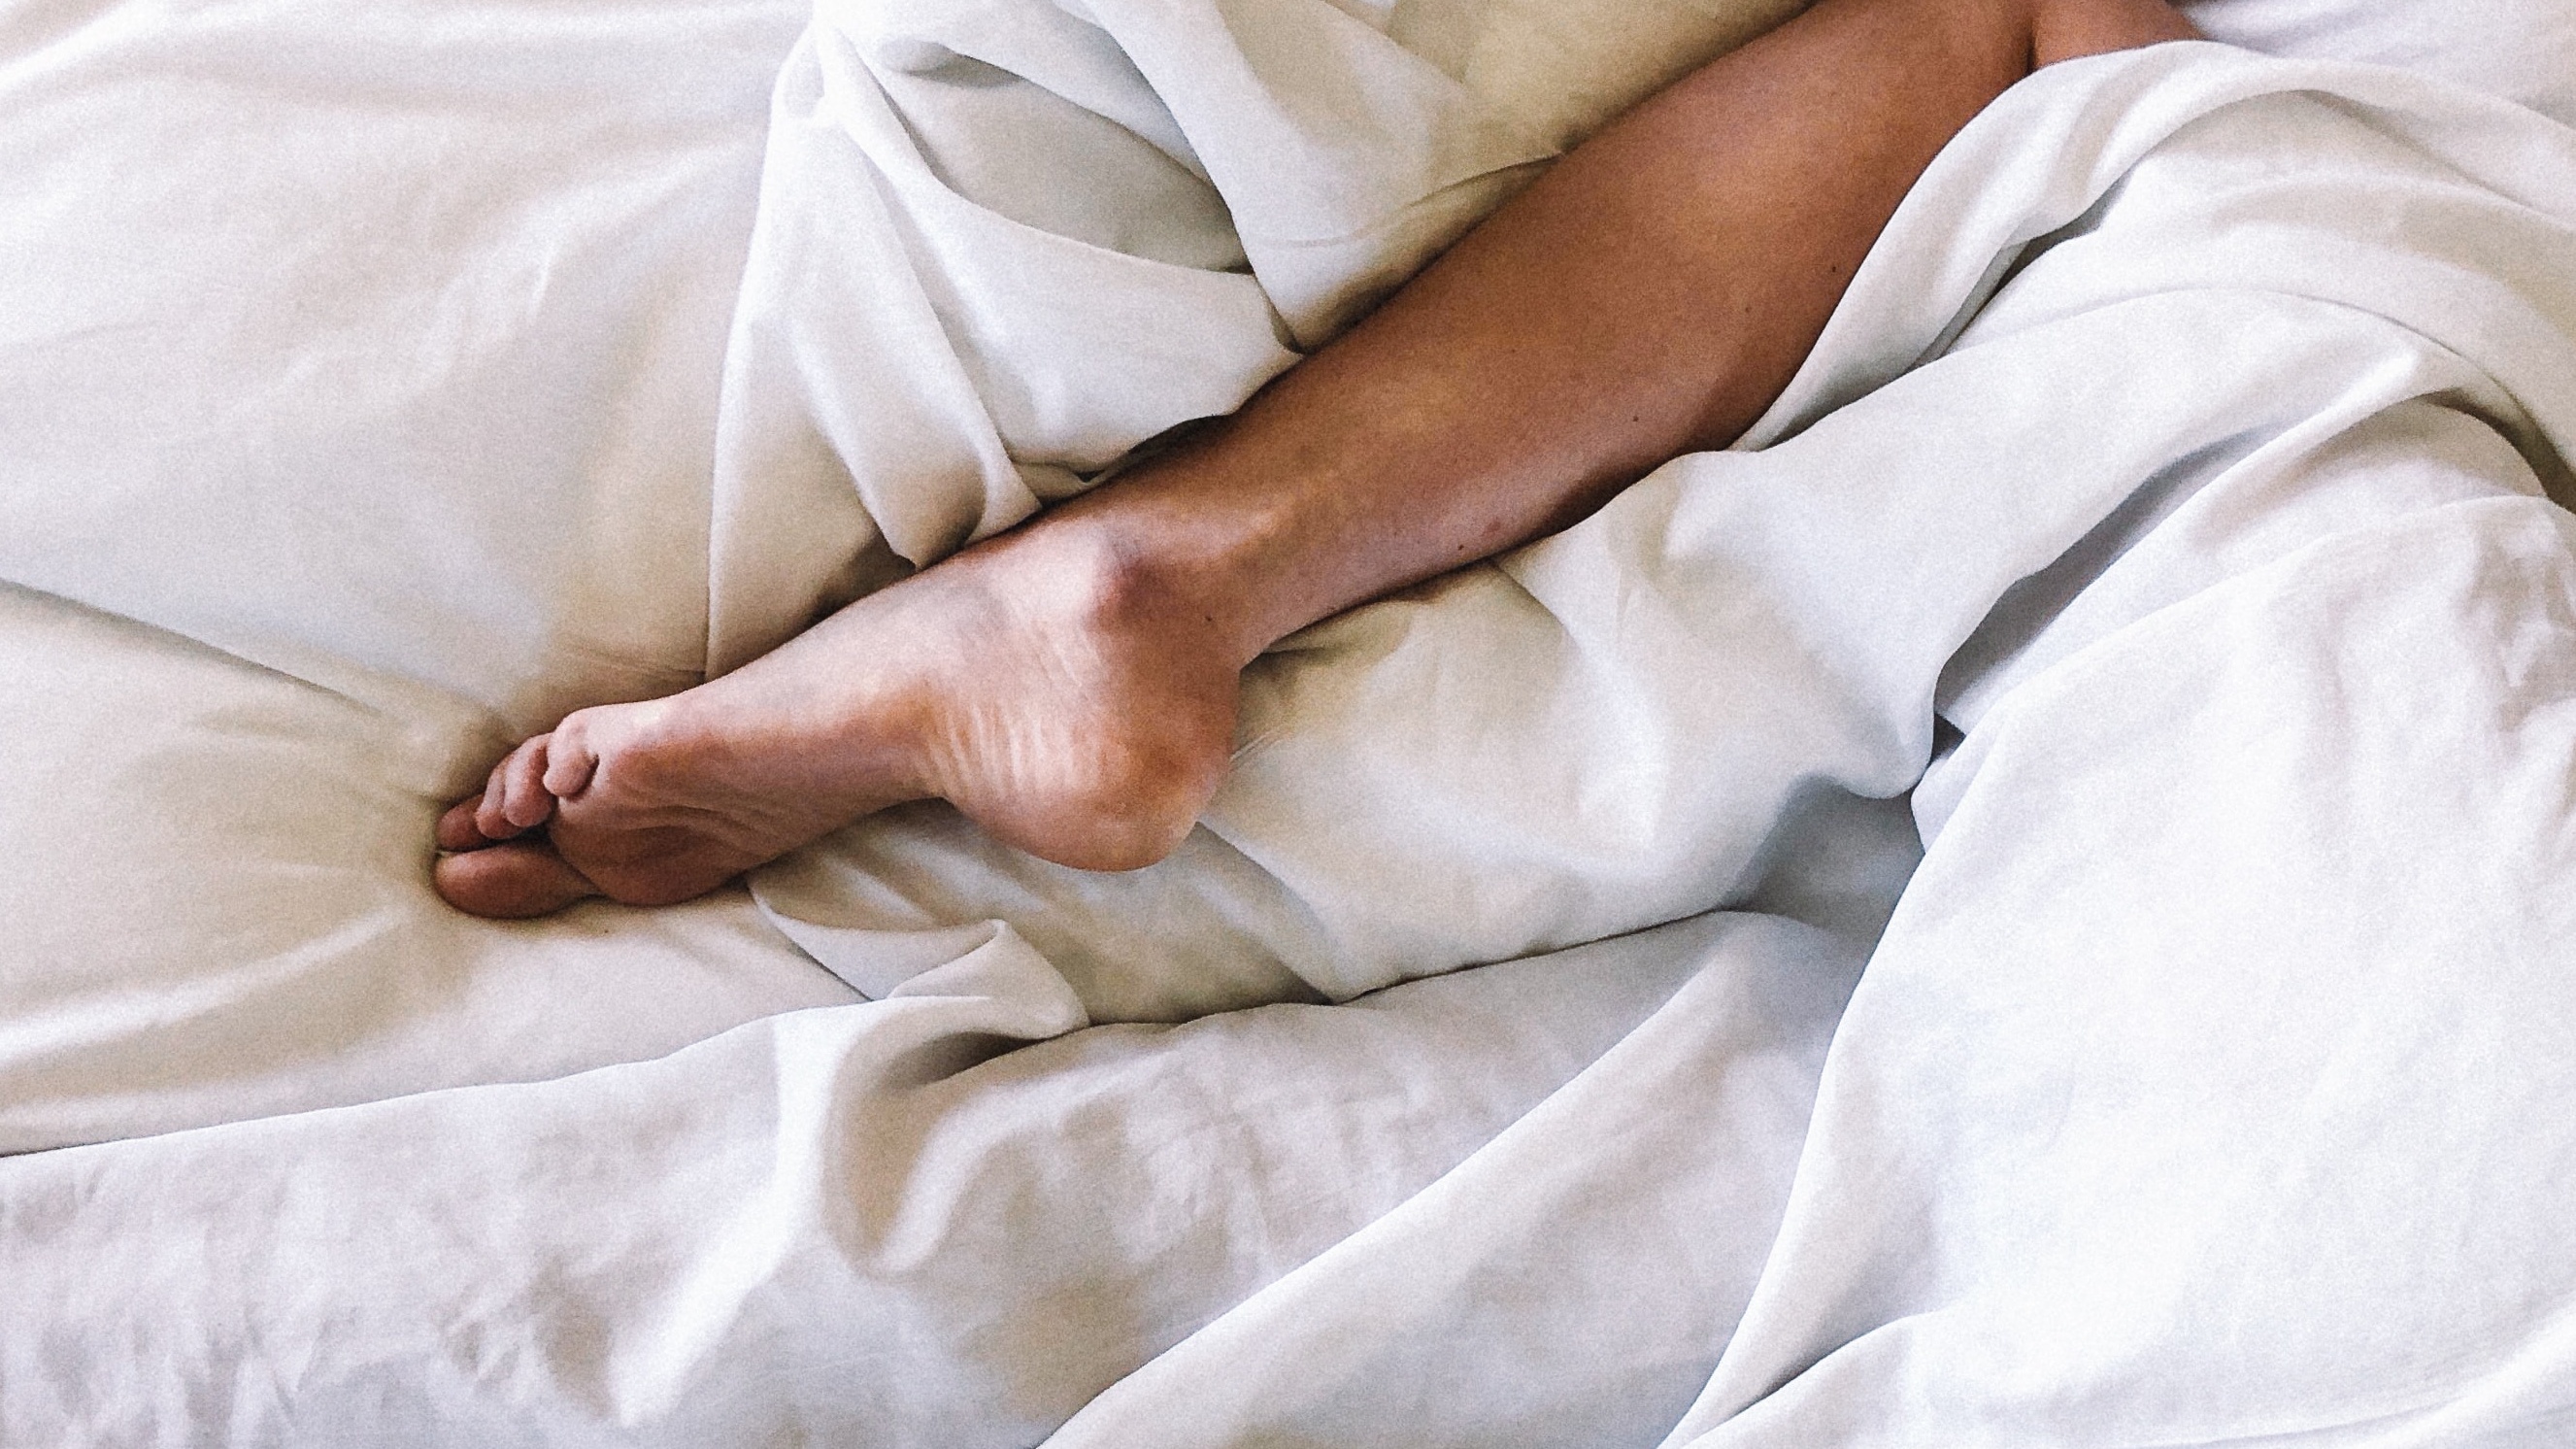 Elasticiteit steno partner Koude voeten in bed: zó krijg je ze lekker warm - Holistik